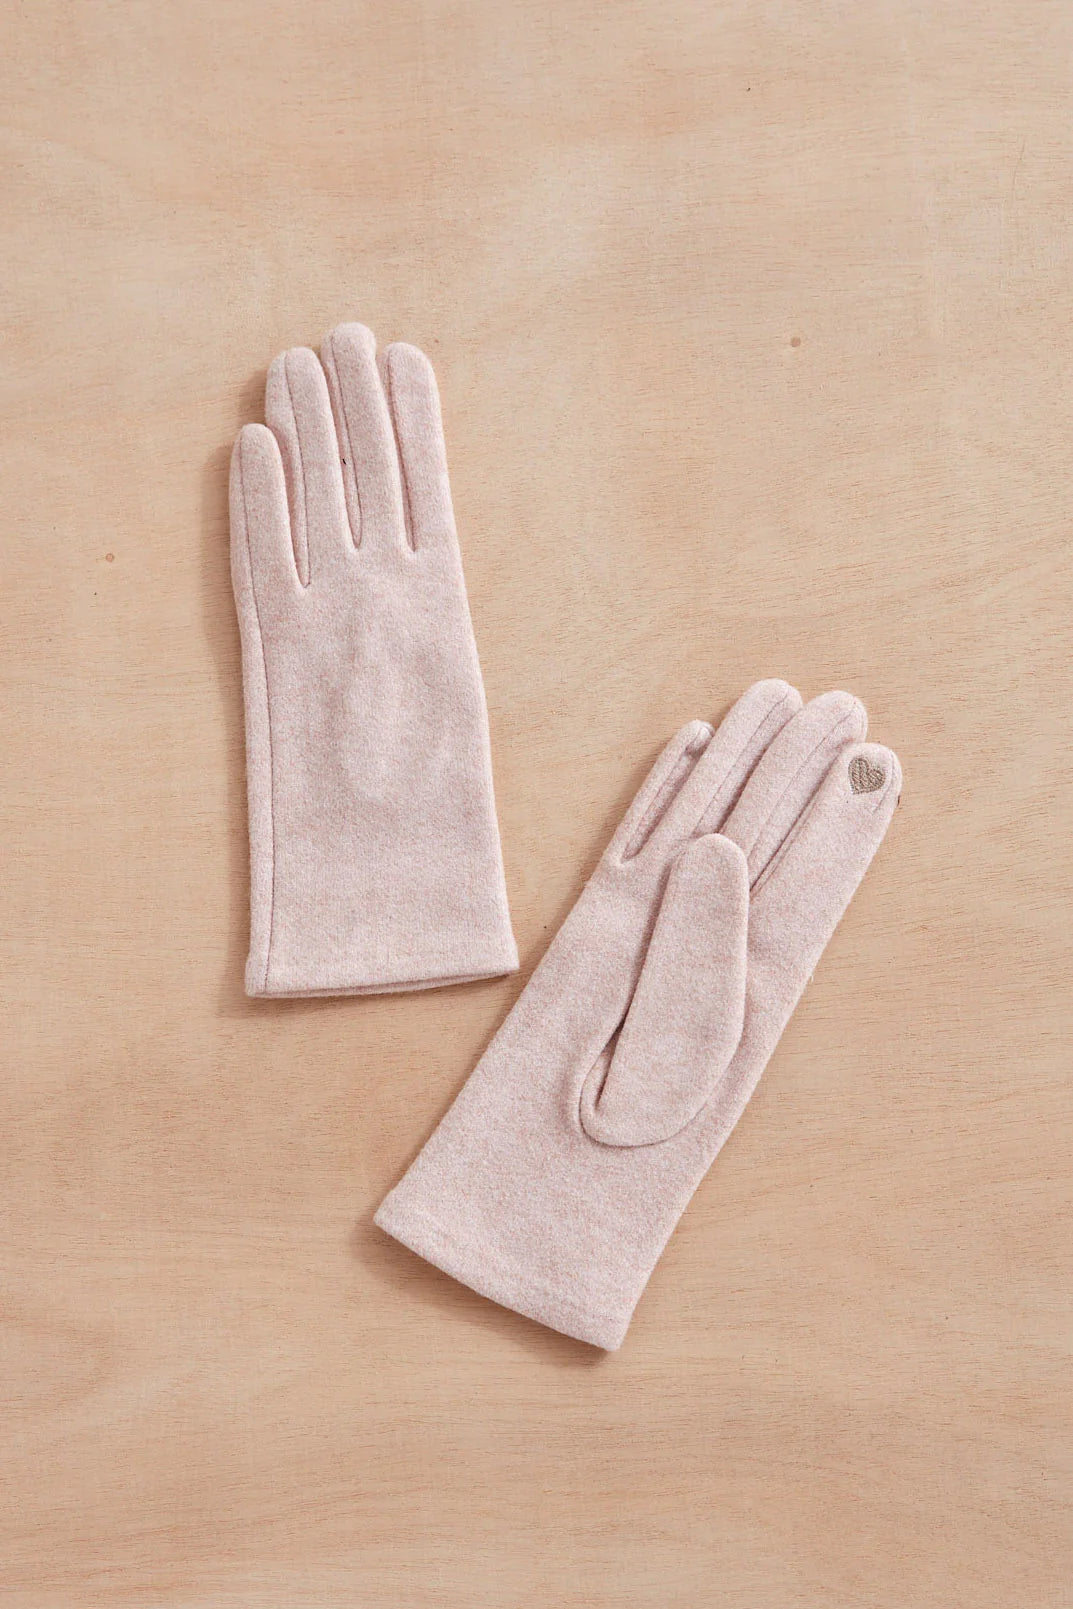 Shari Chic Plain Gloves in Blush - Madison's Niche 